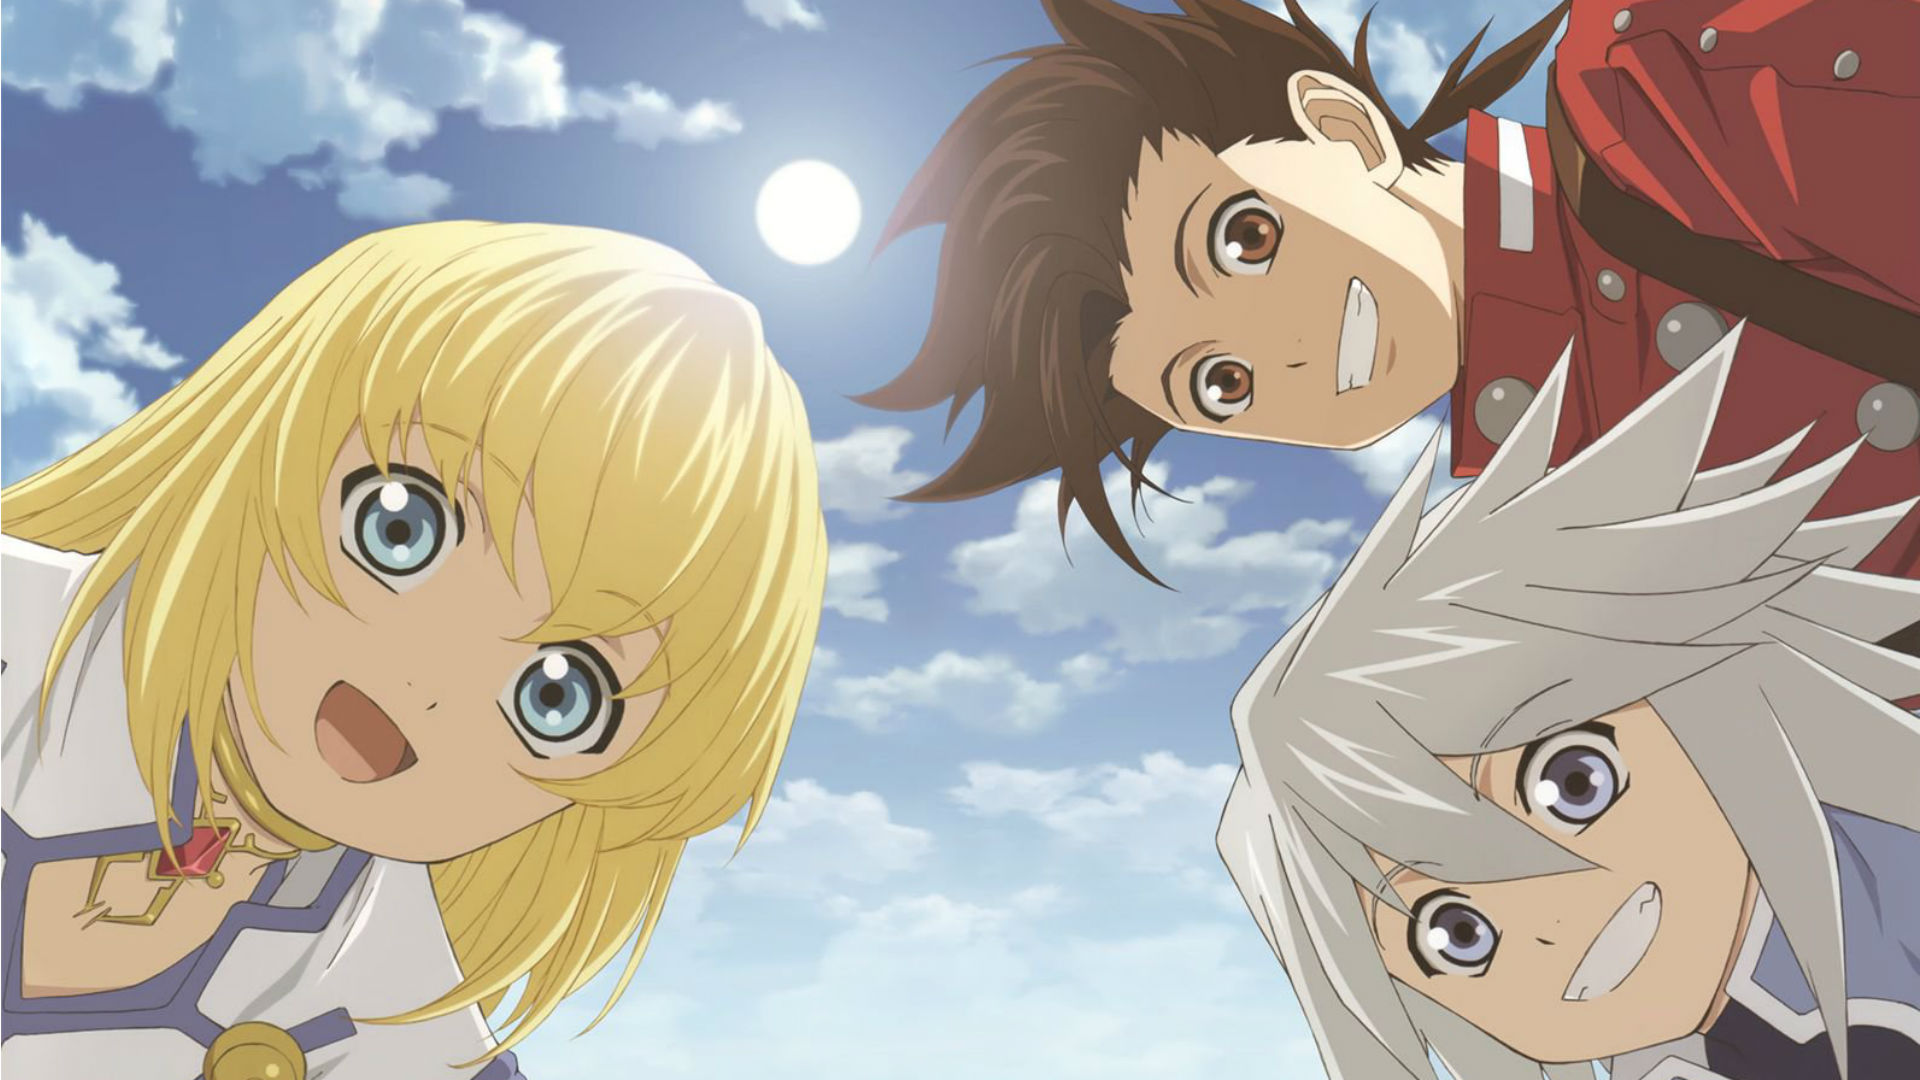 Game Anime Terbaik: Tales of Symphonia. Gambar menunjukkan tiga anime orang yang memandang rendah Anda dan tampak bahagia dengan awan di belakang mereka